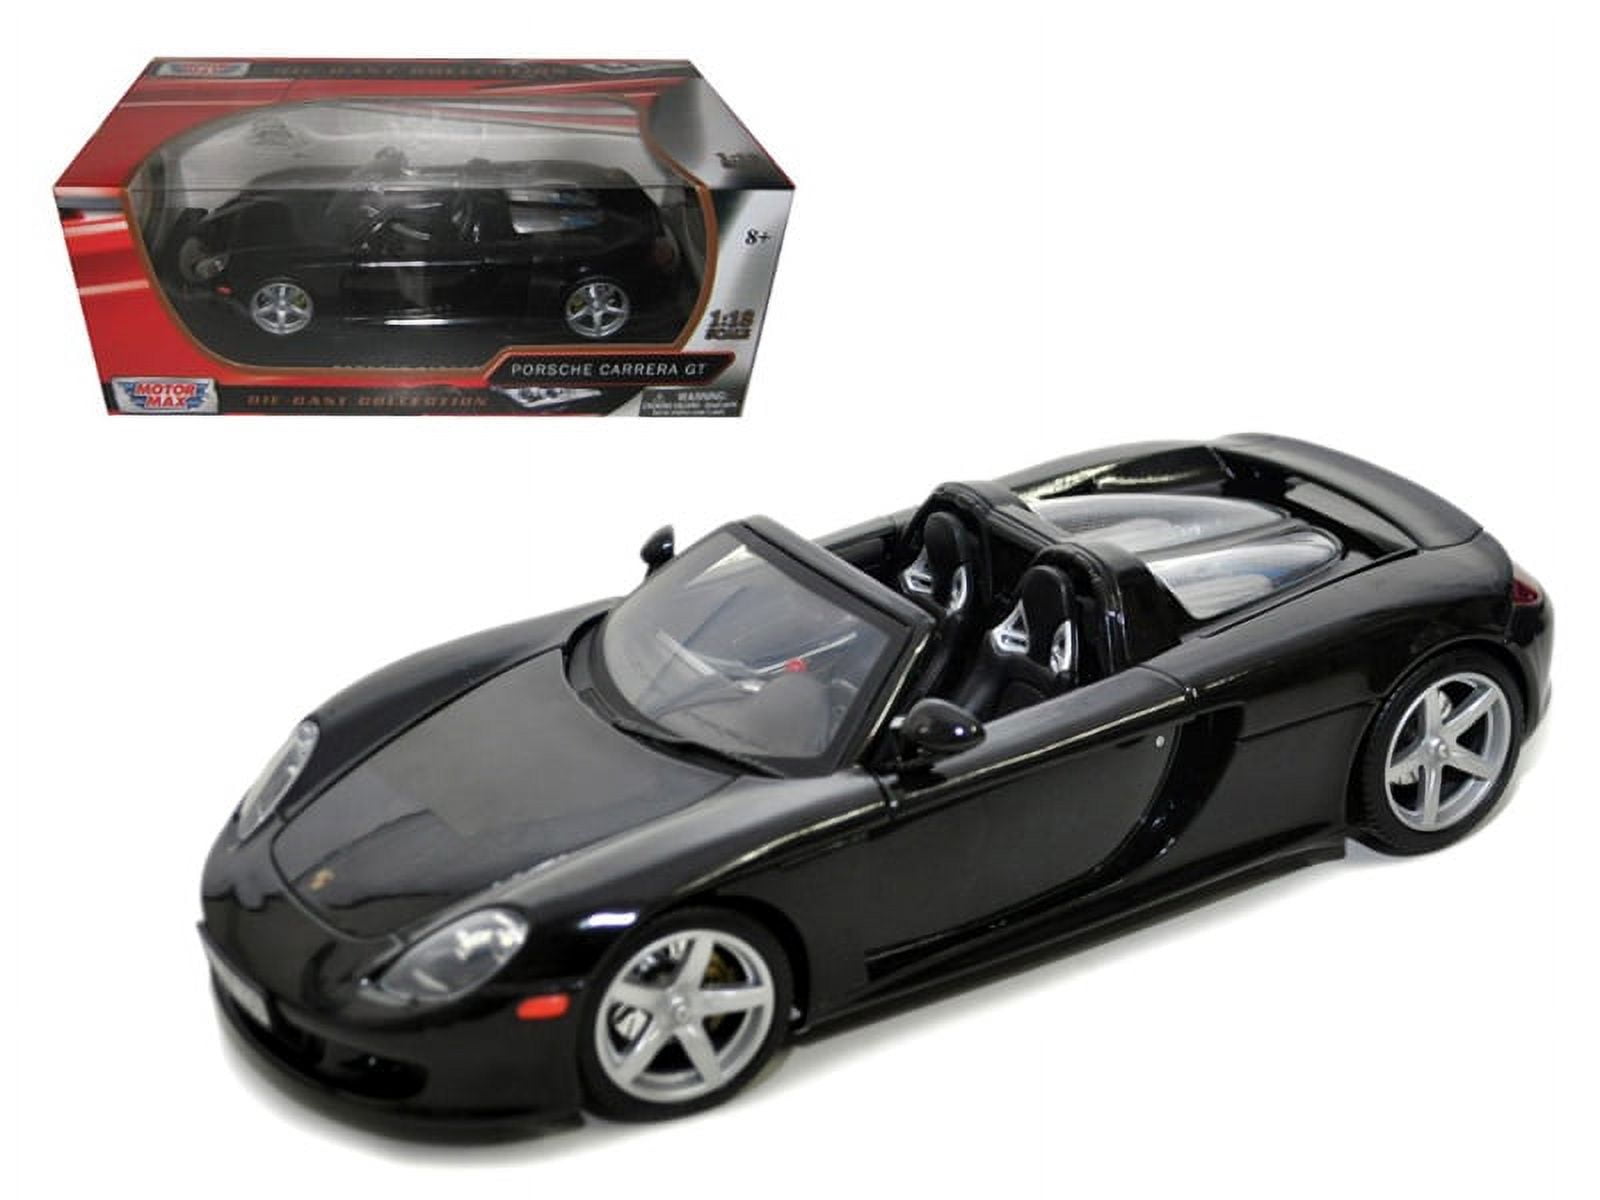 Porsche Carrera GT Convertible Black with Black Interior 1/18